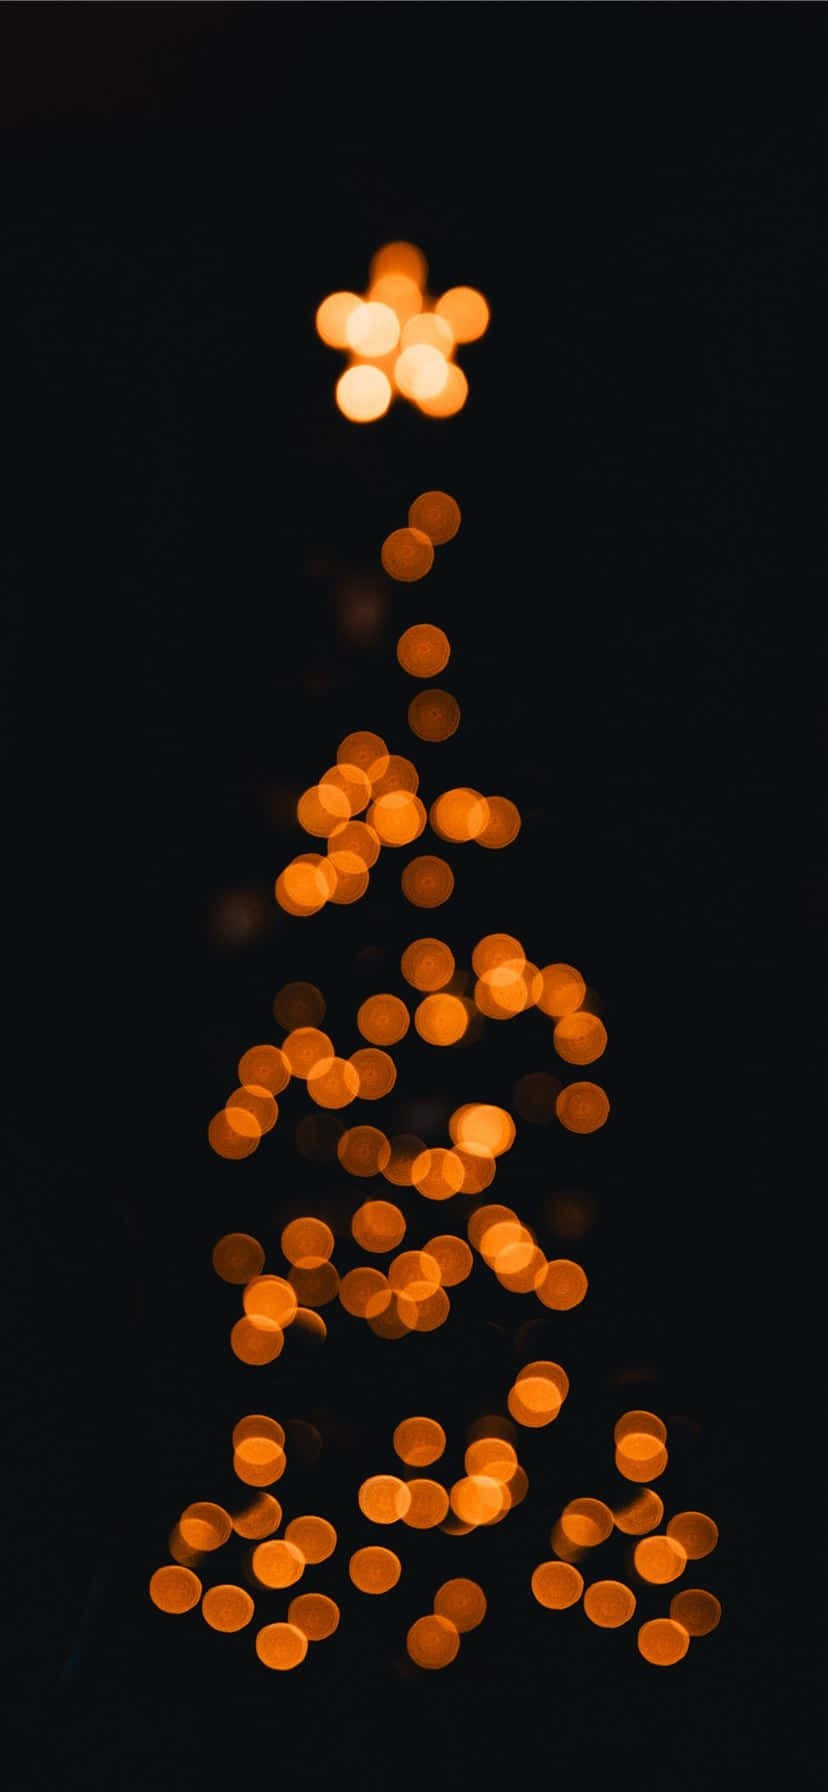 Dark Christmas Tree Bokeh Lights Wallpaper